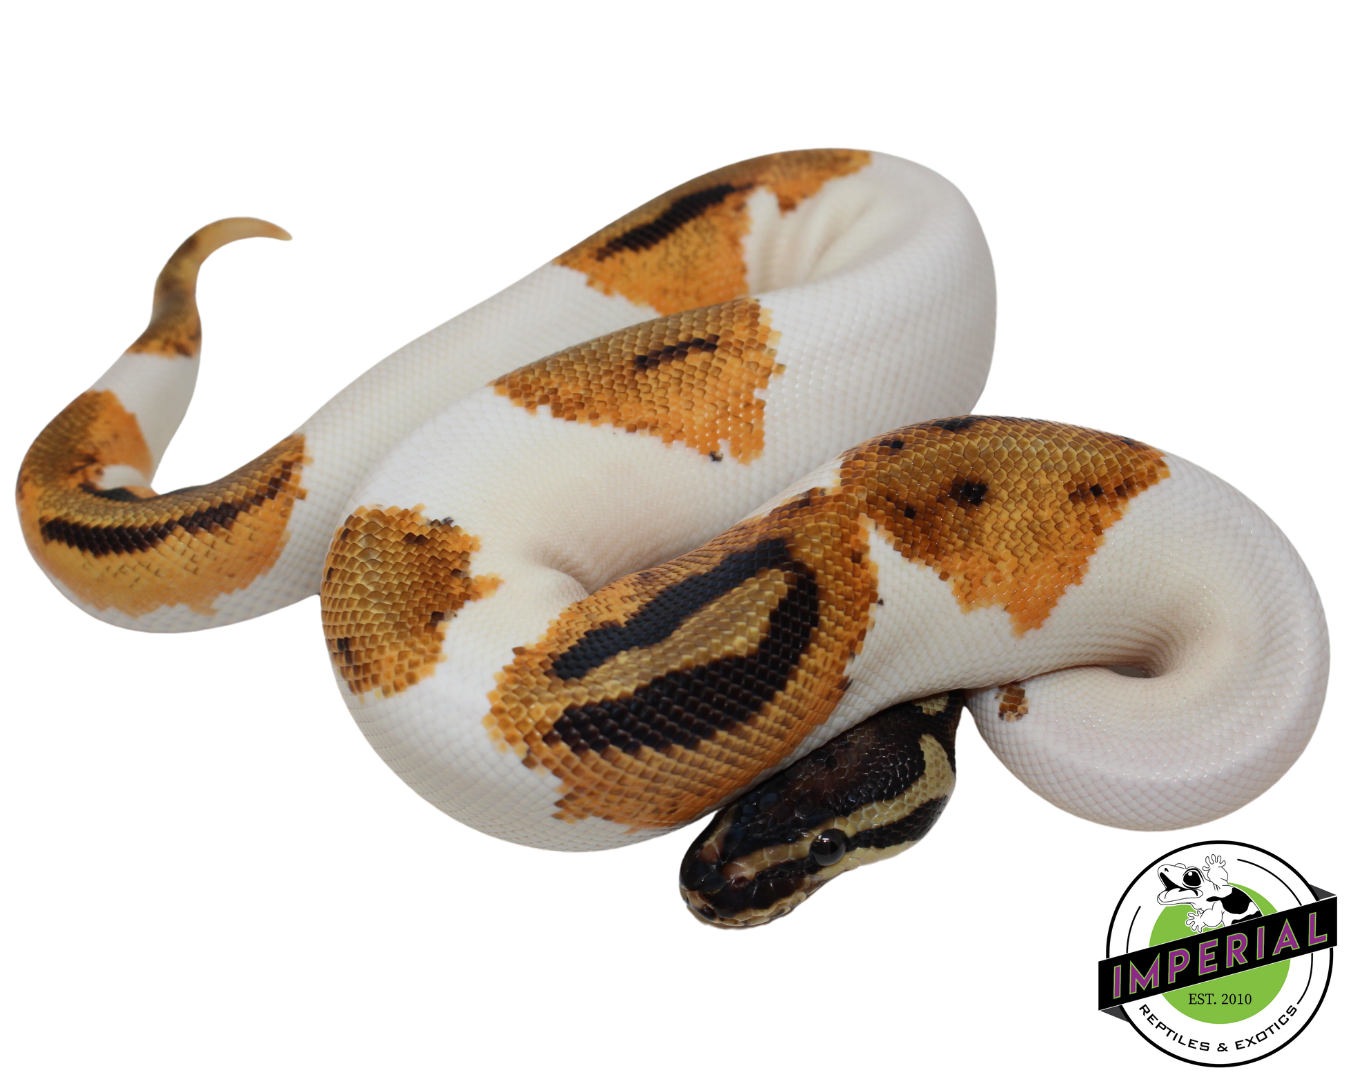 Orange Dream Piebald Ball Python for sale, reptiles for sale, buy reptiles online